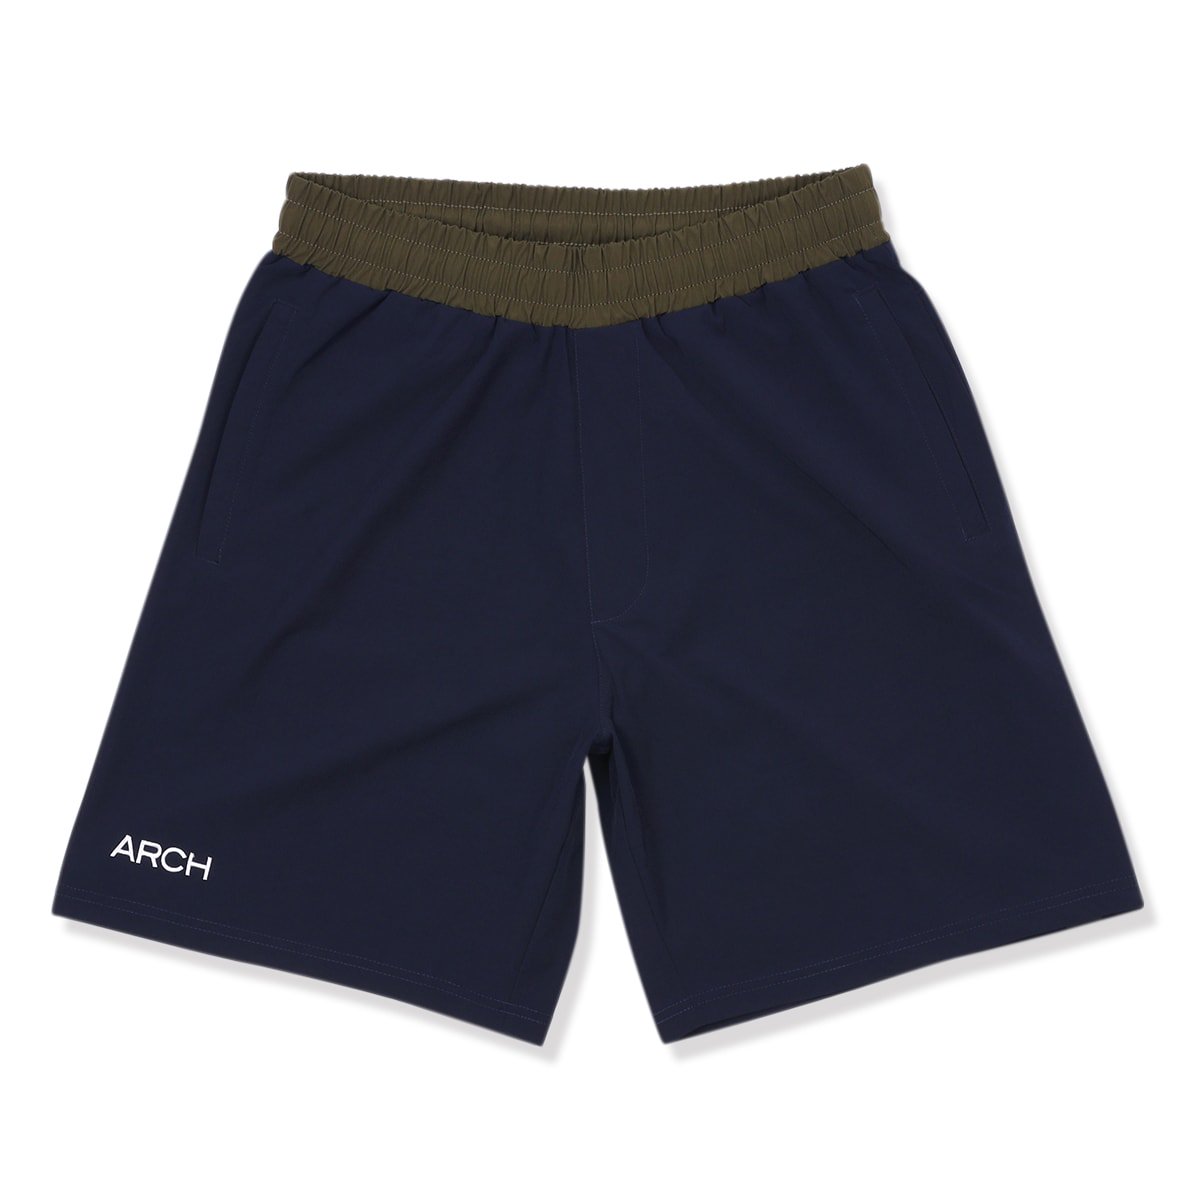 leopard pocket shorts【navy】